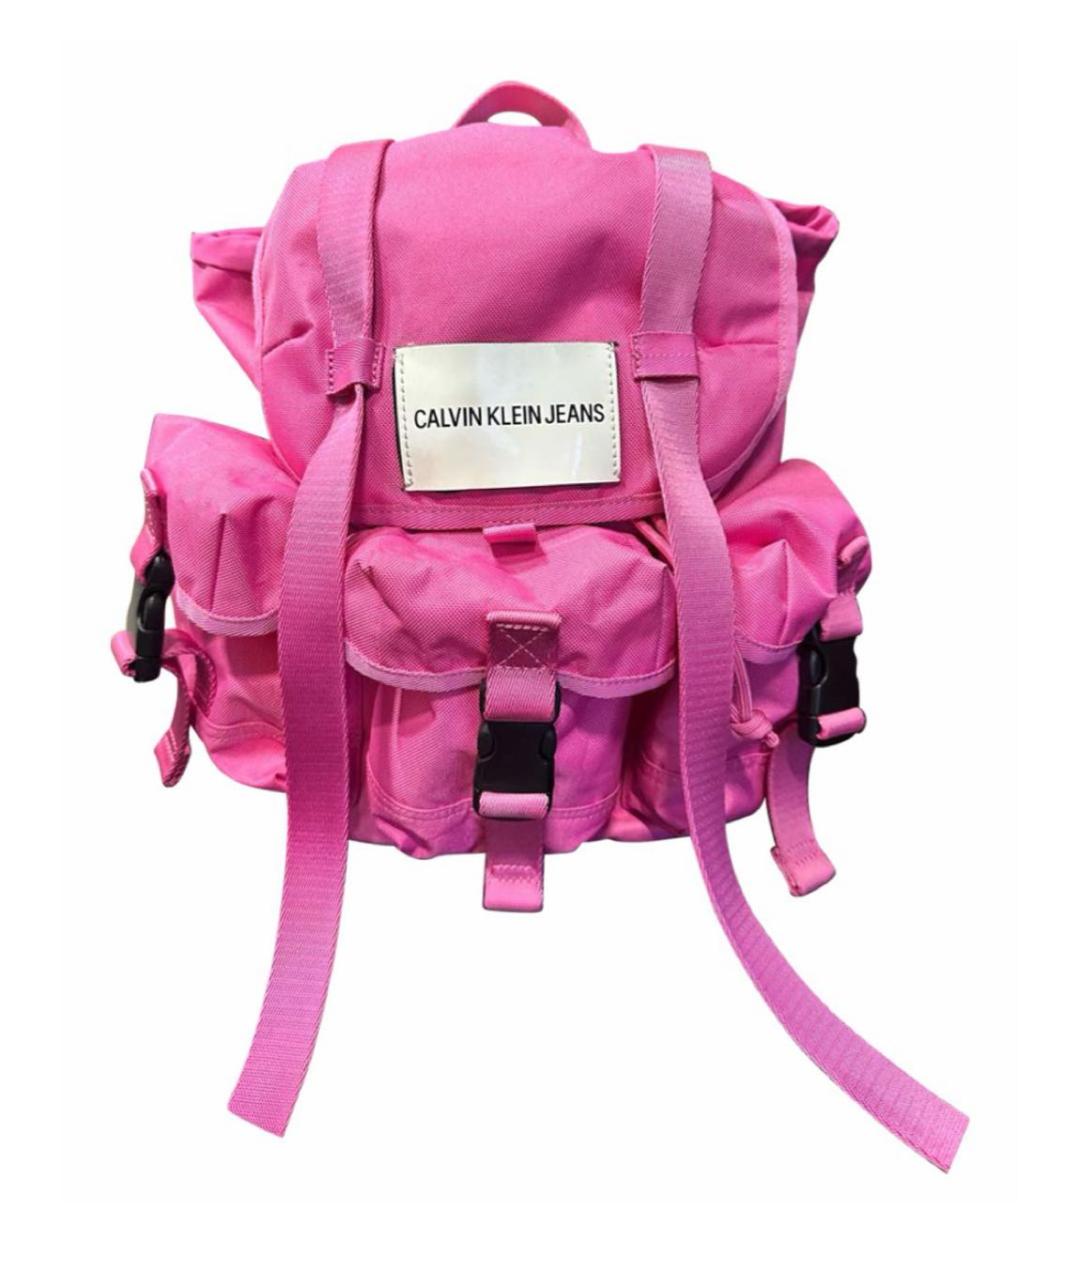 CALVIN KLEIN JEANS Розовый синтетический рюкзак, фото 1